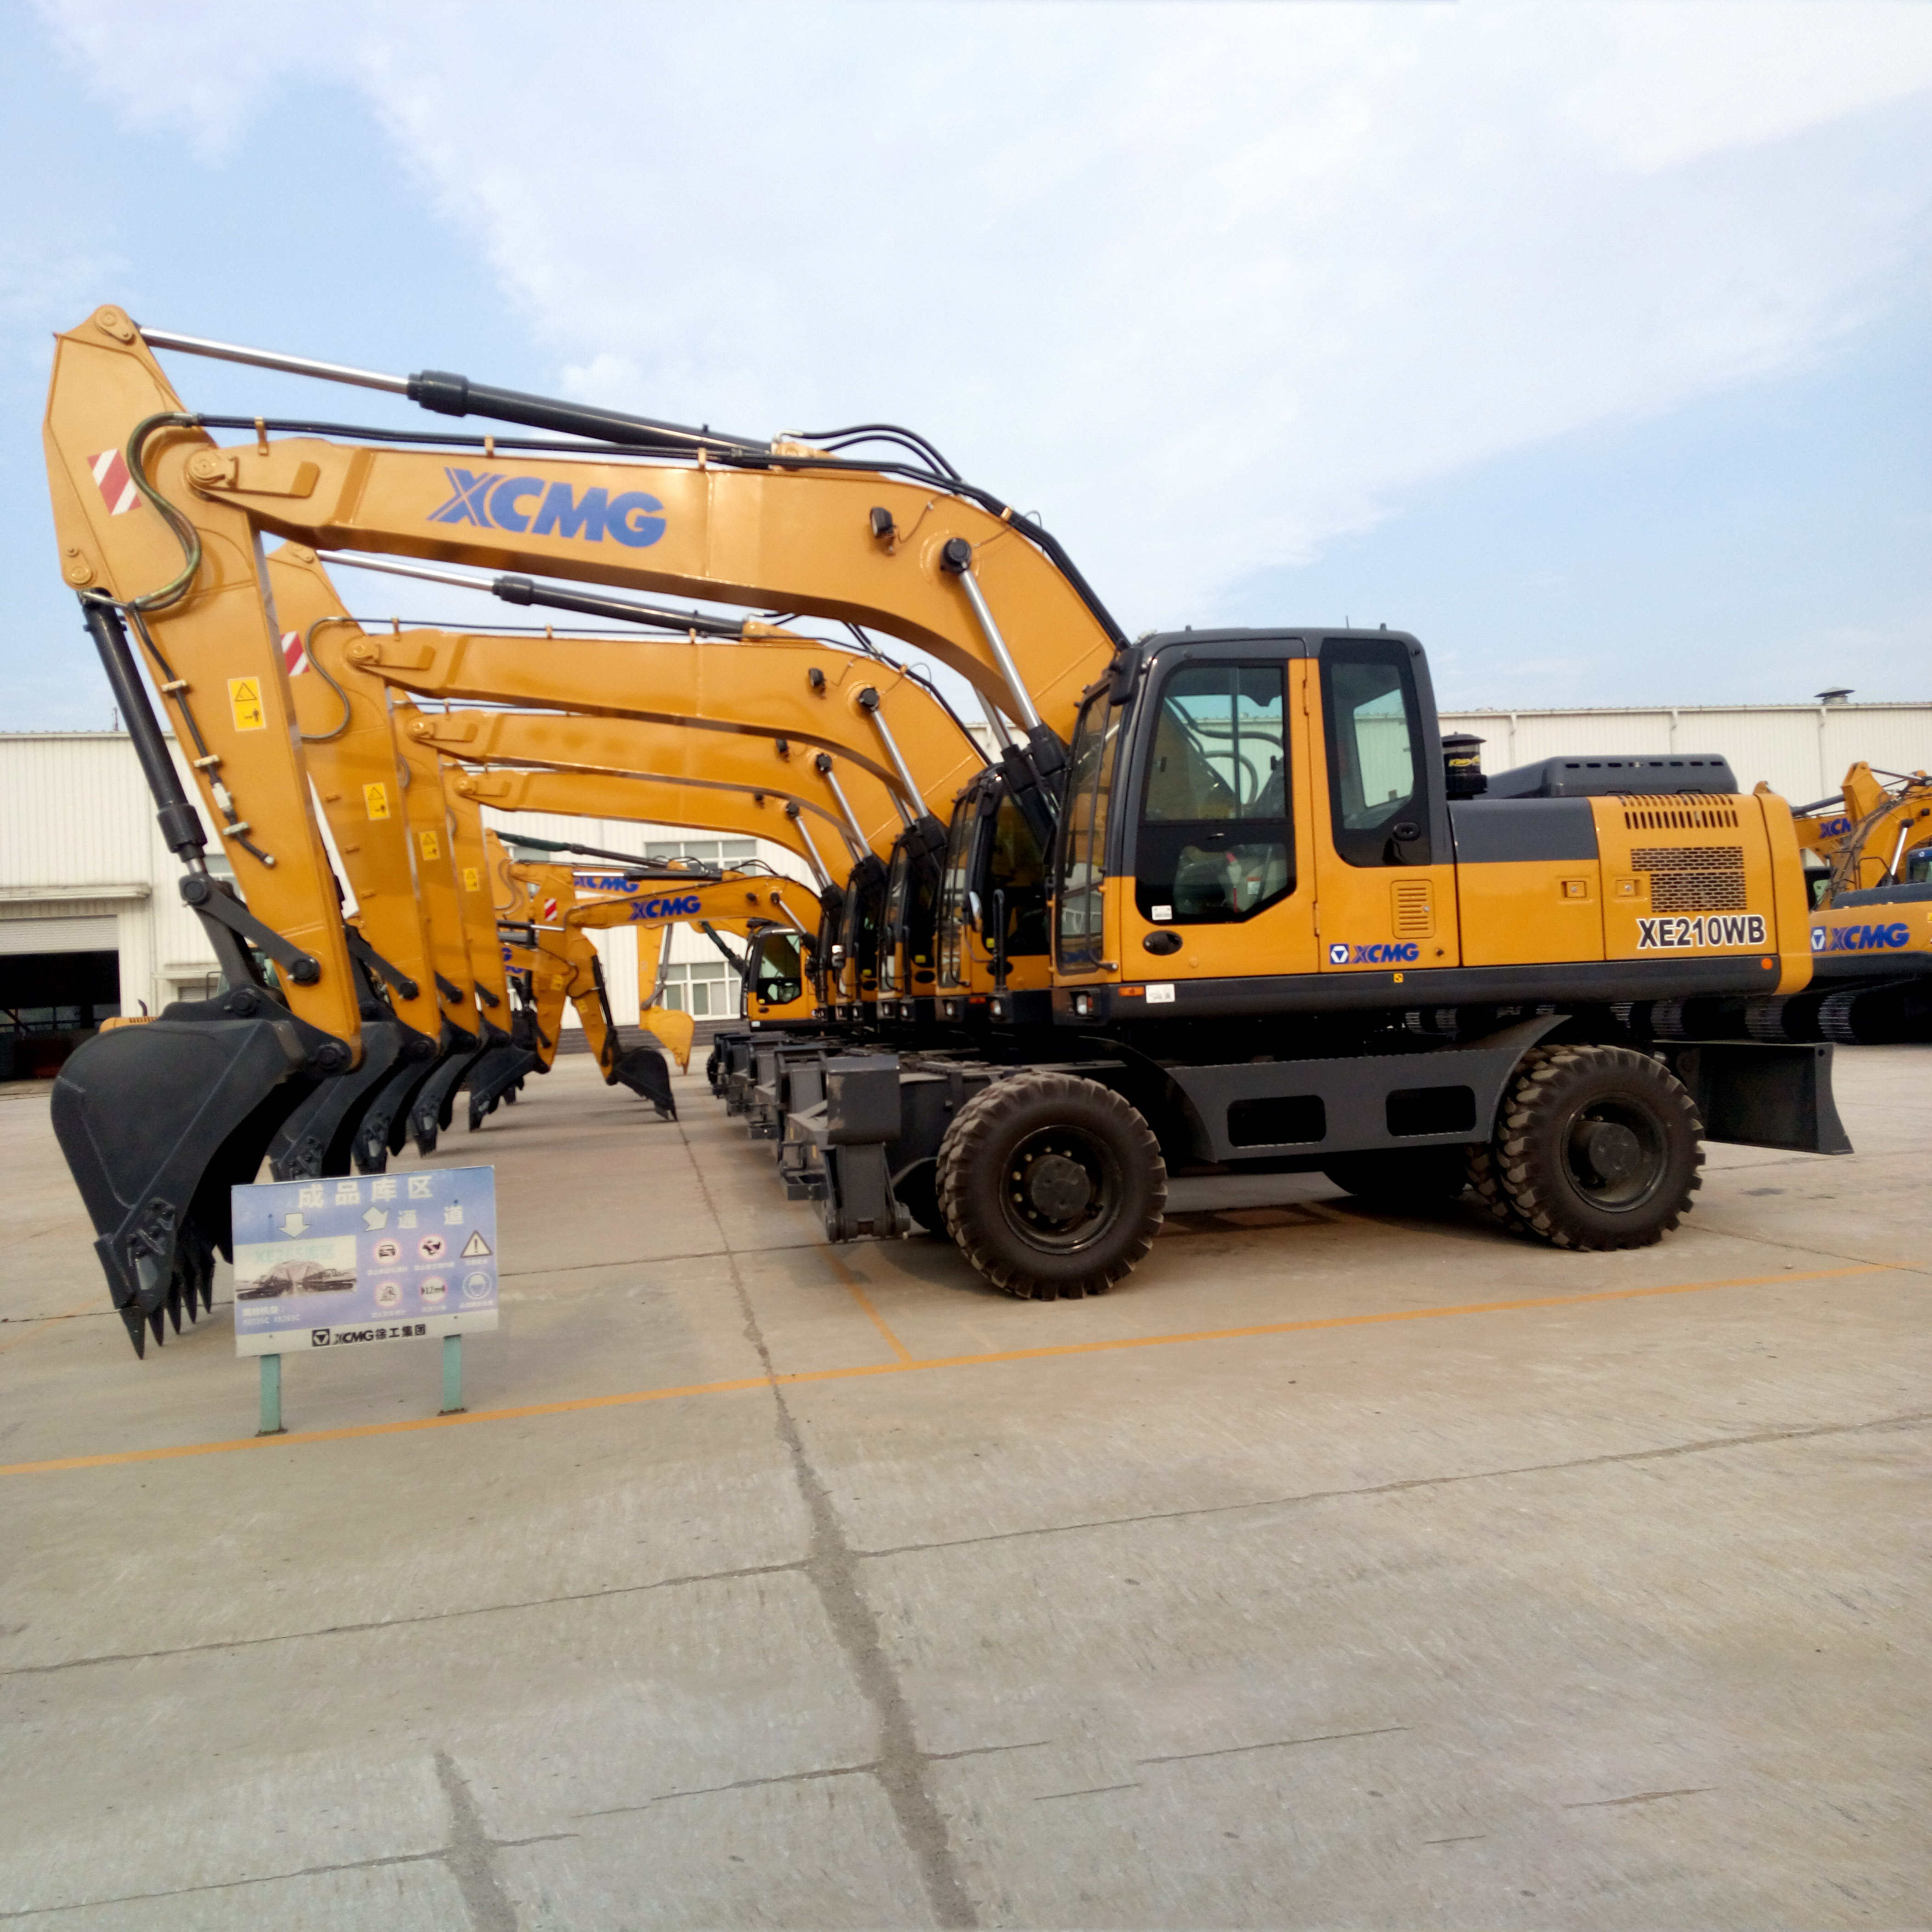 XCMG 20 ton 0.9m³ XE210WB Wheeled Excavator